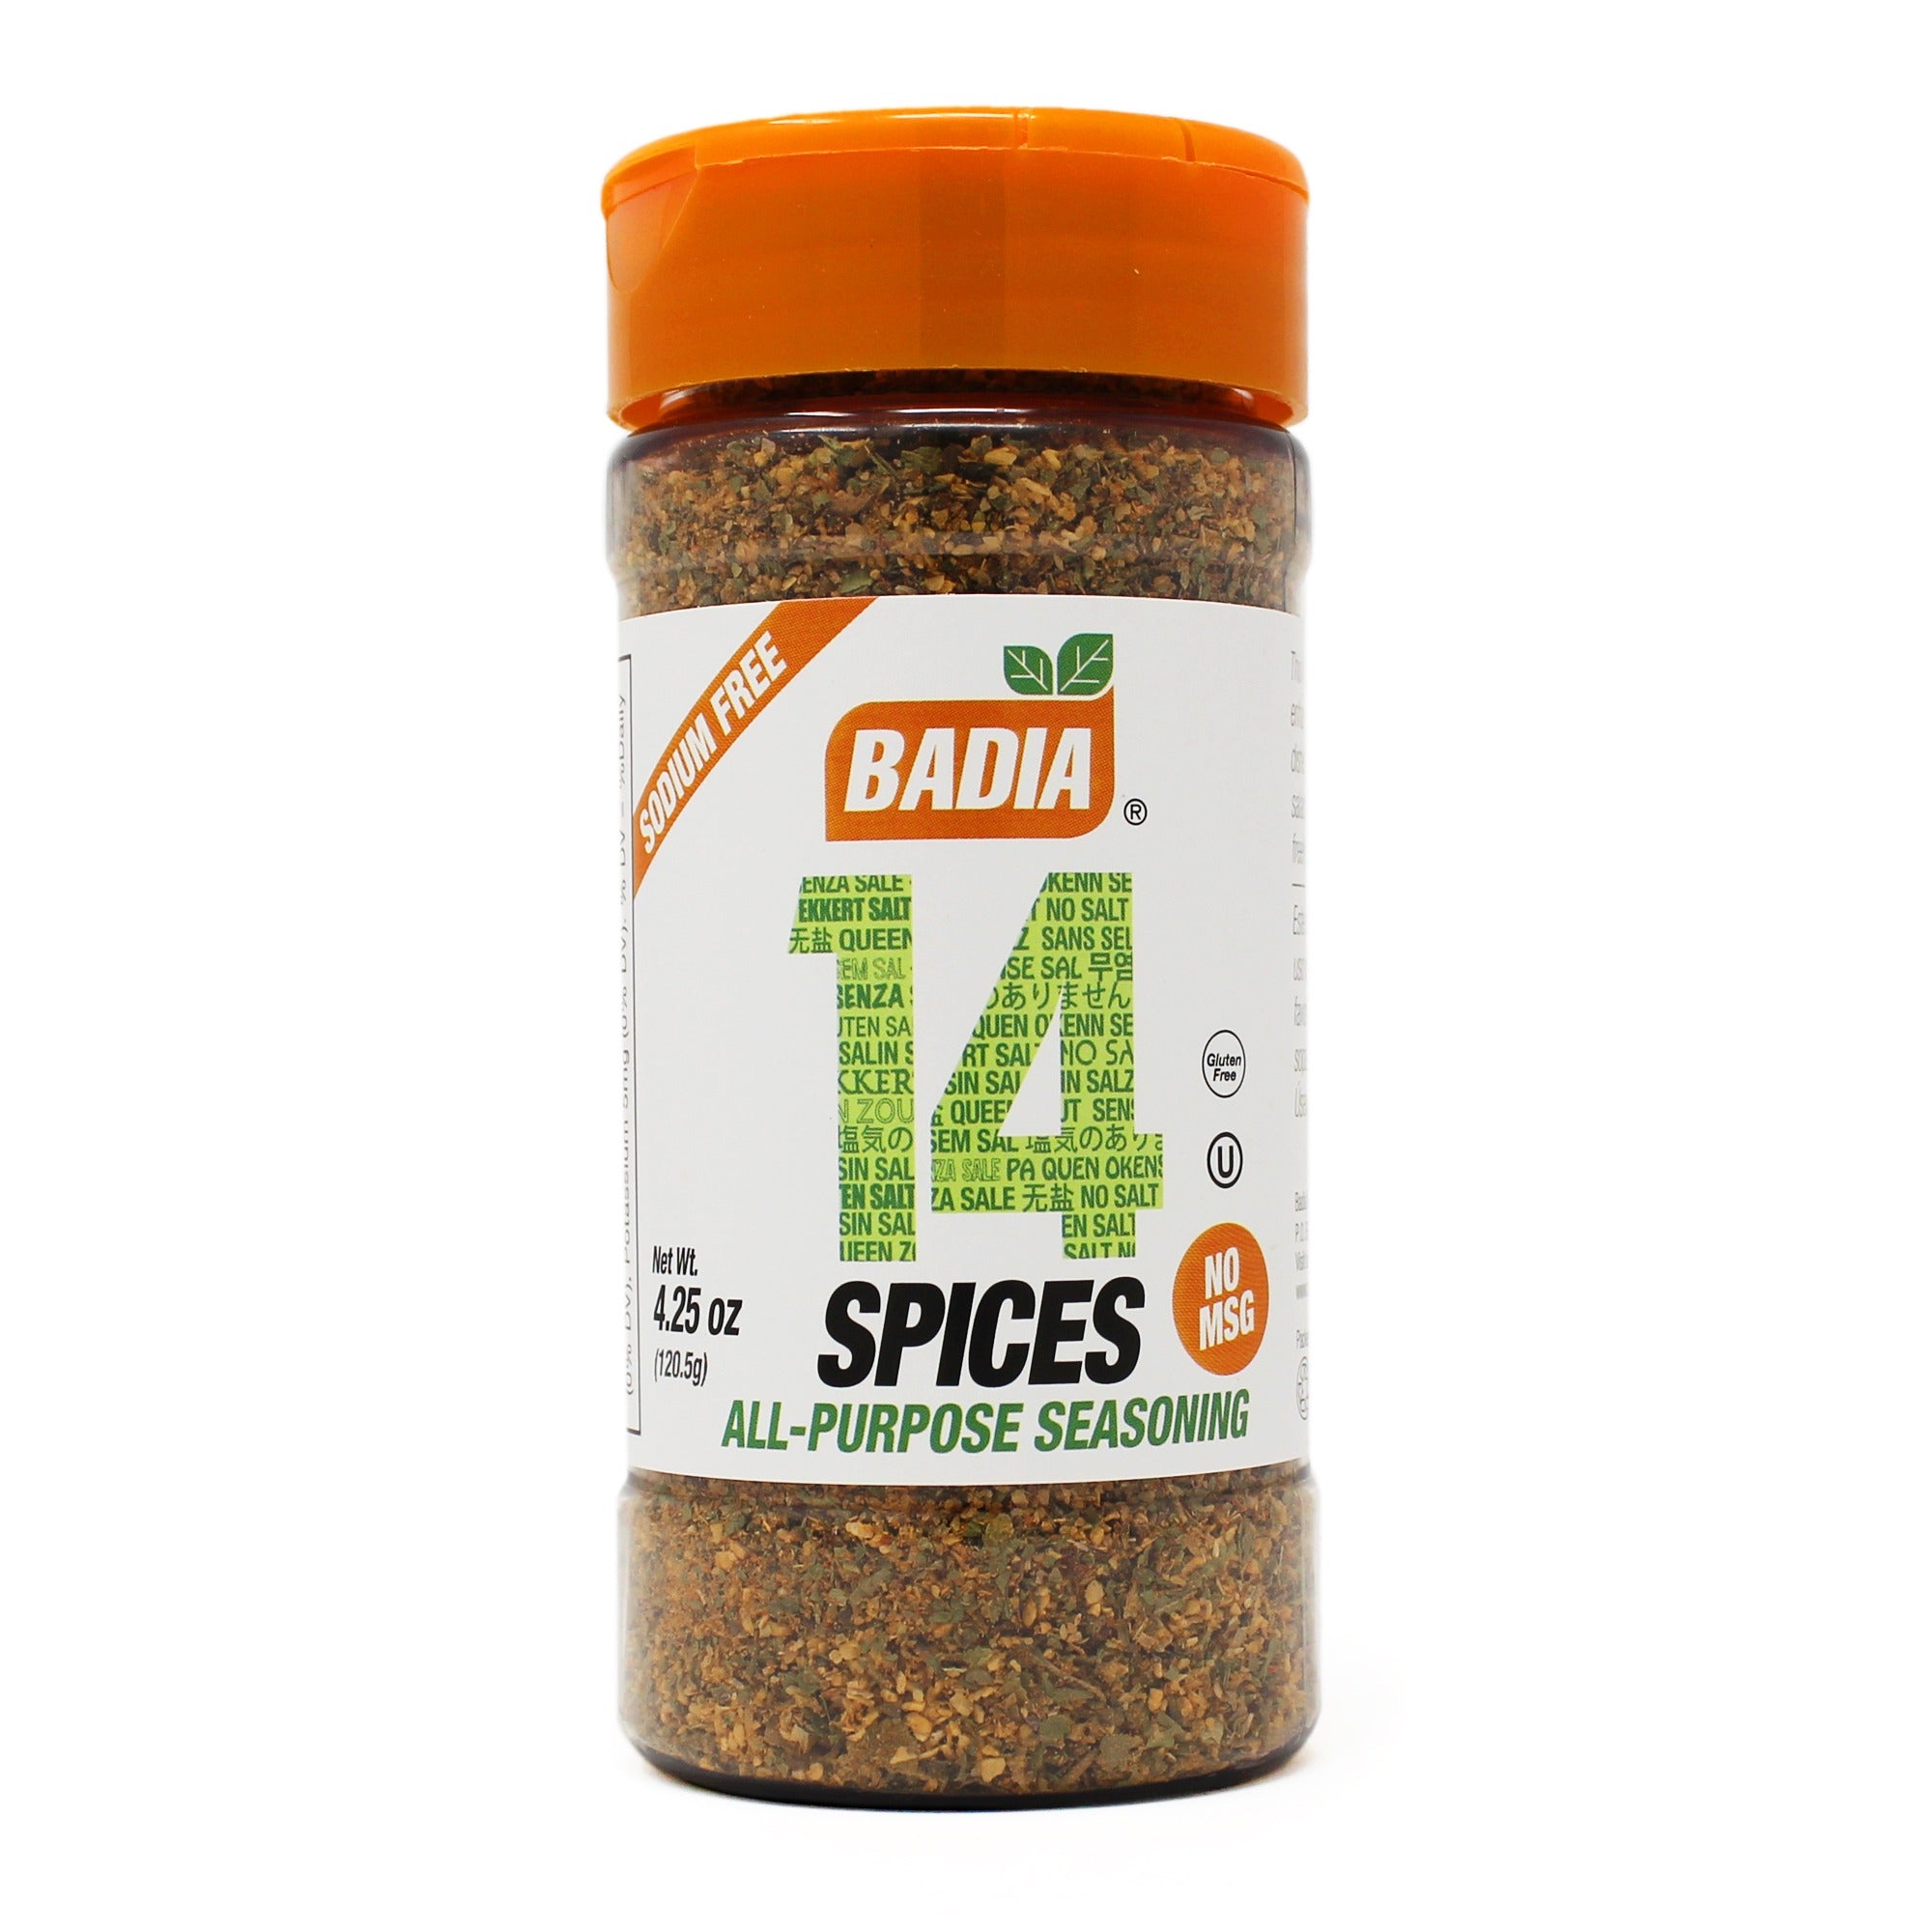 Badia Complete Seasoning, The Original - 12 oz